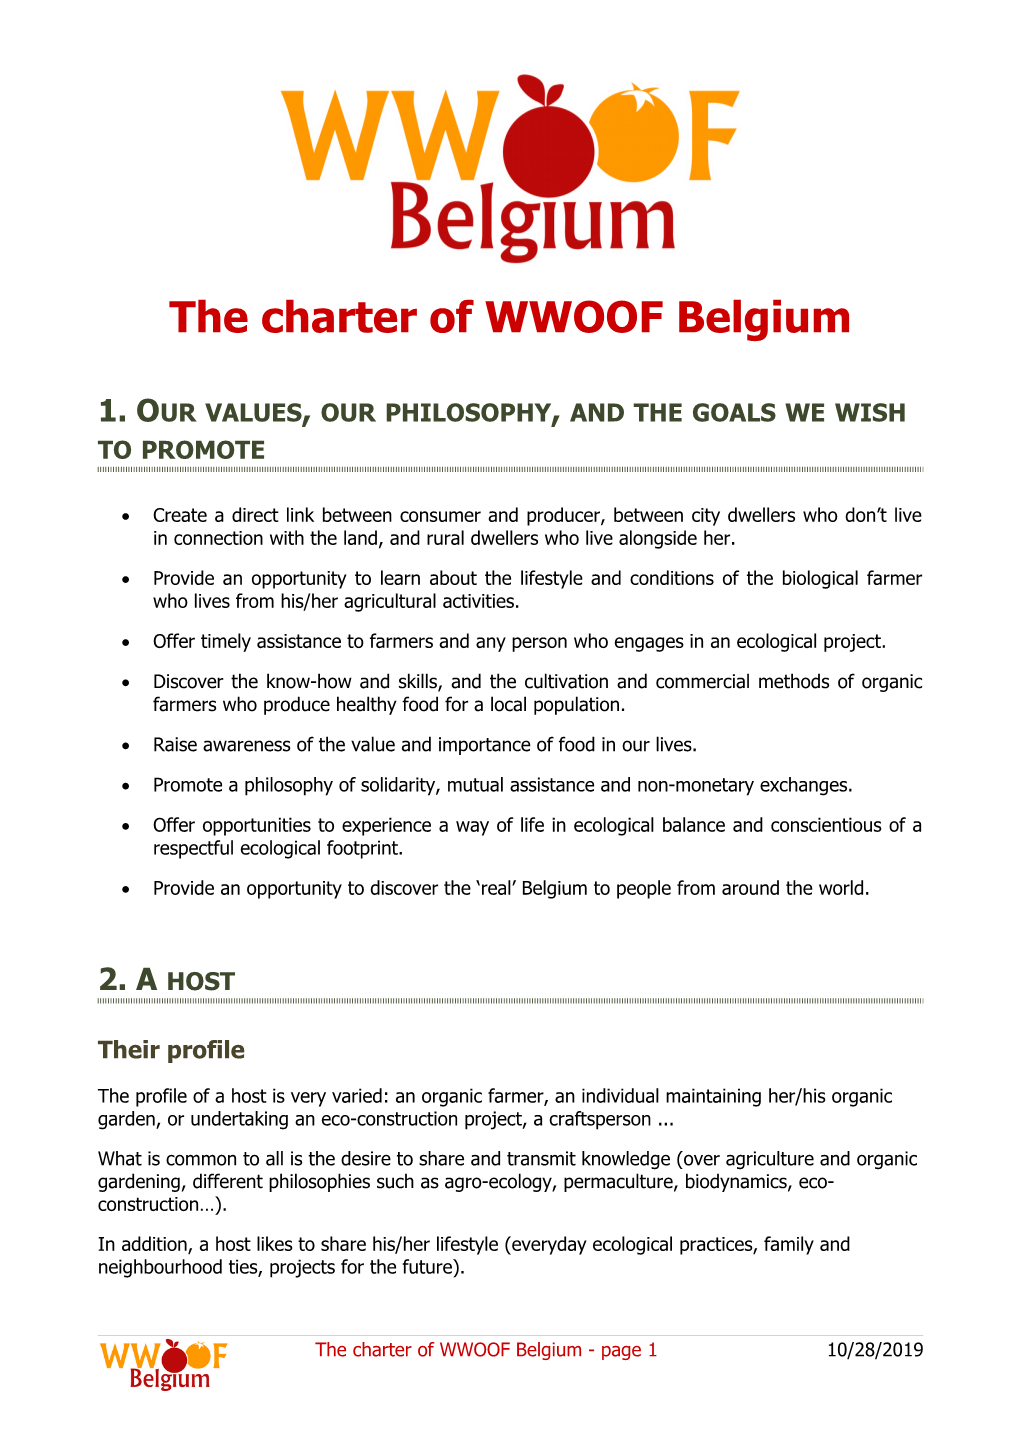 The Charter of WWOOF Belgium